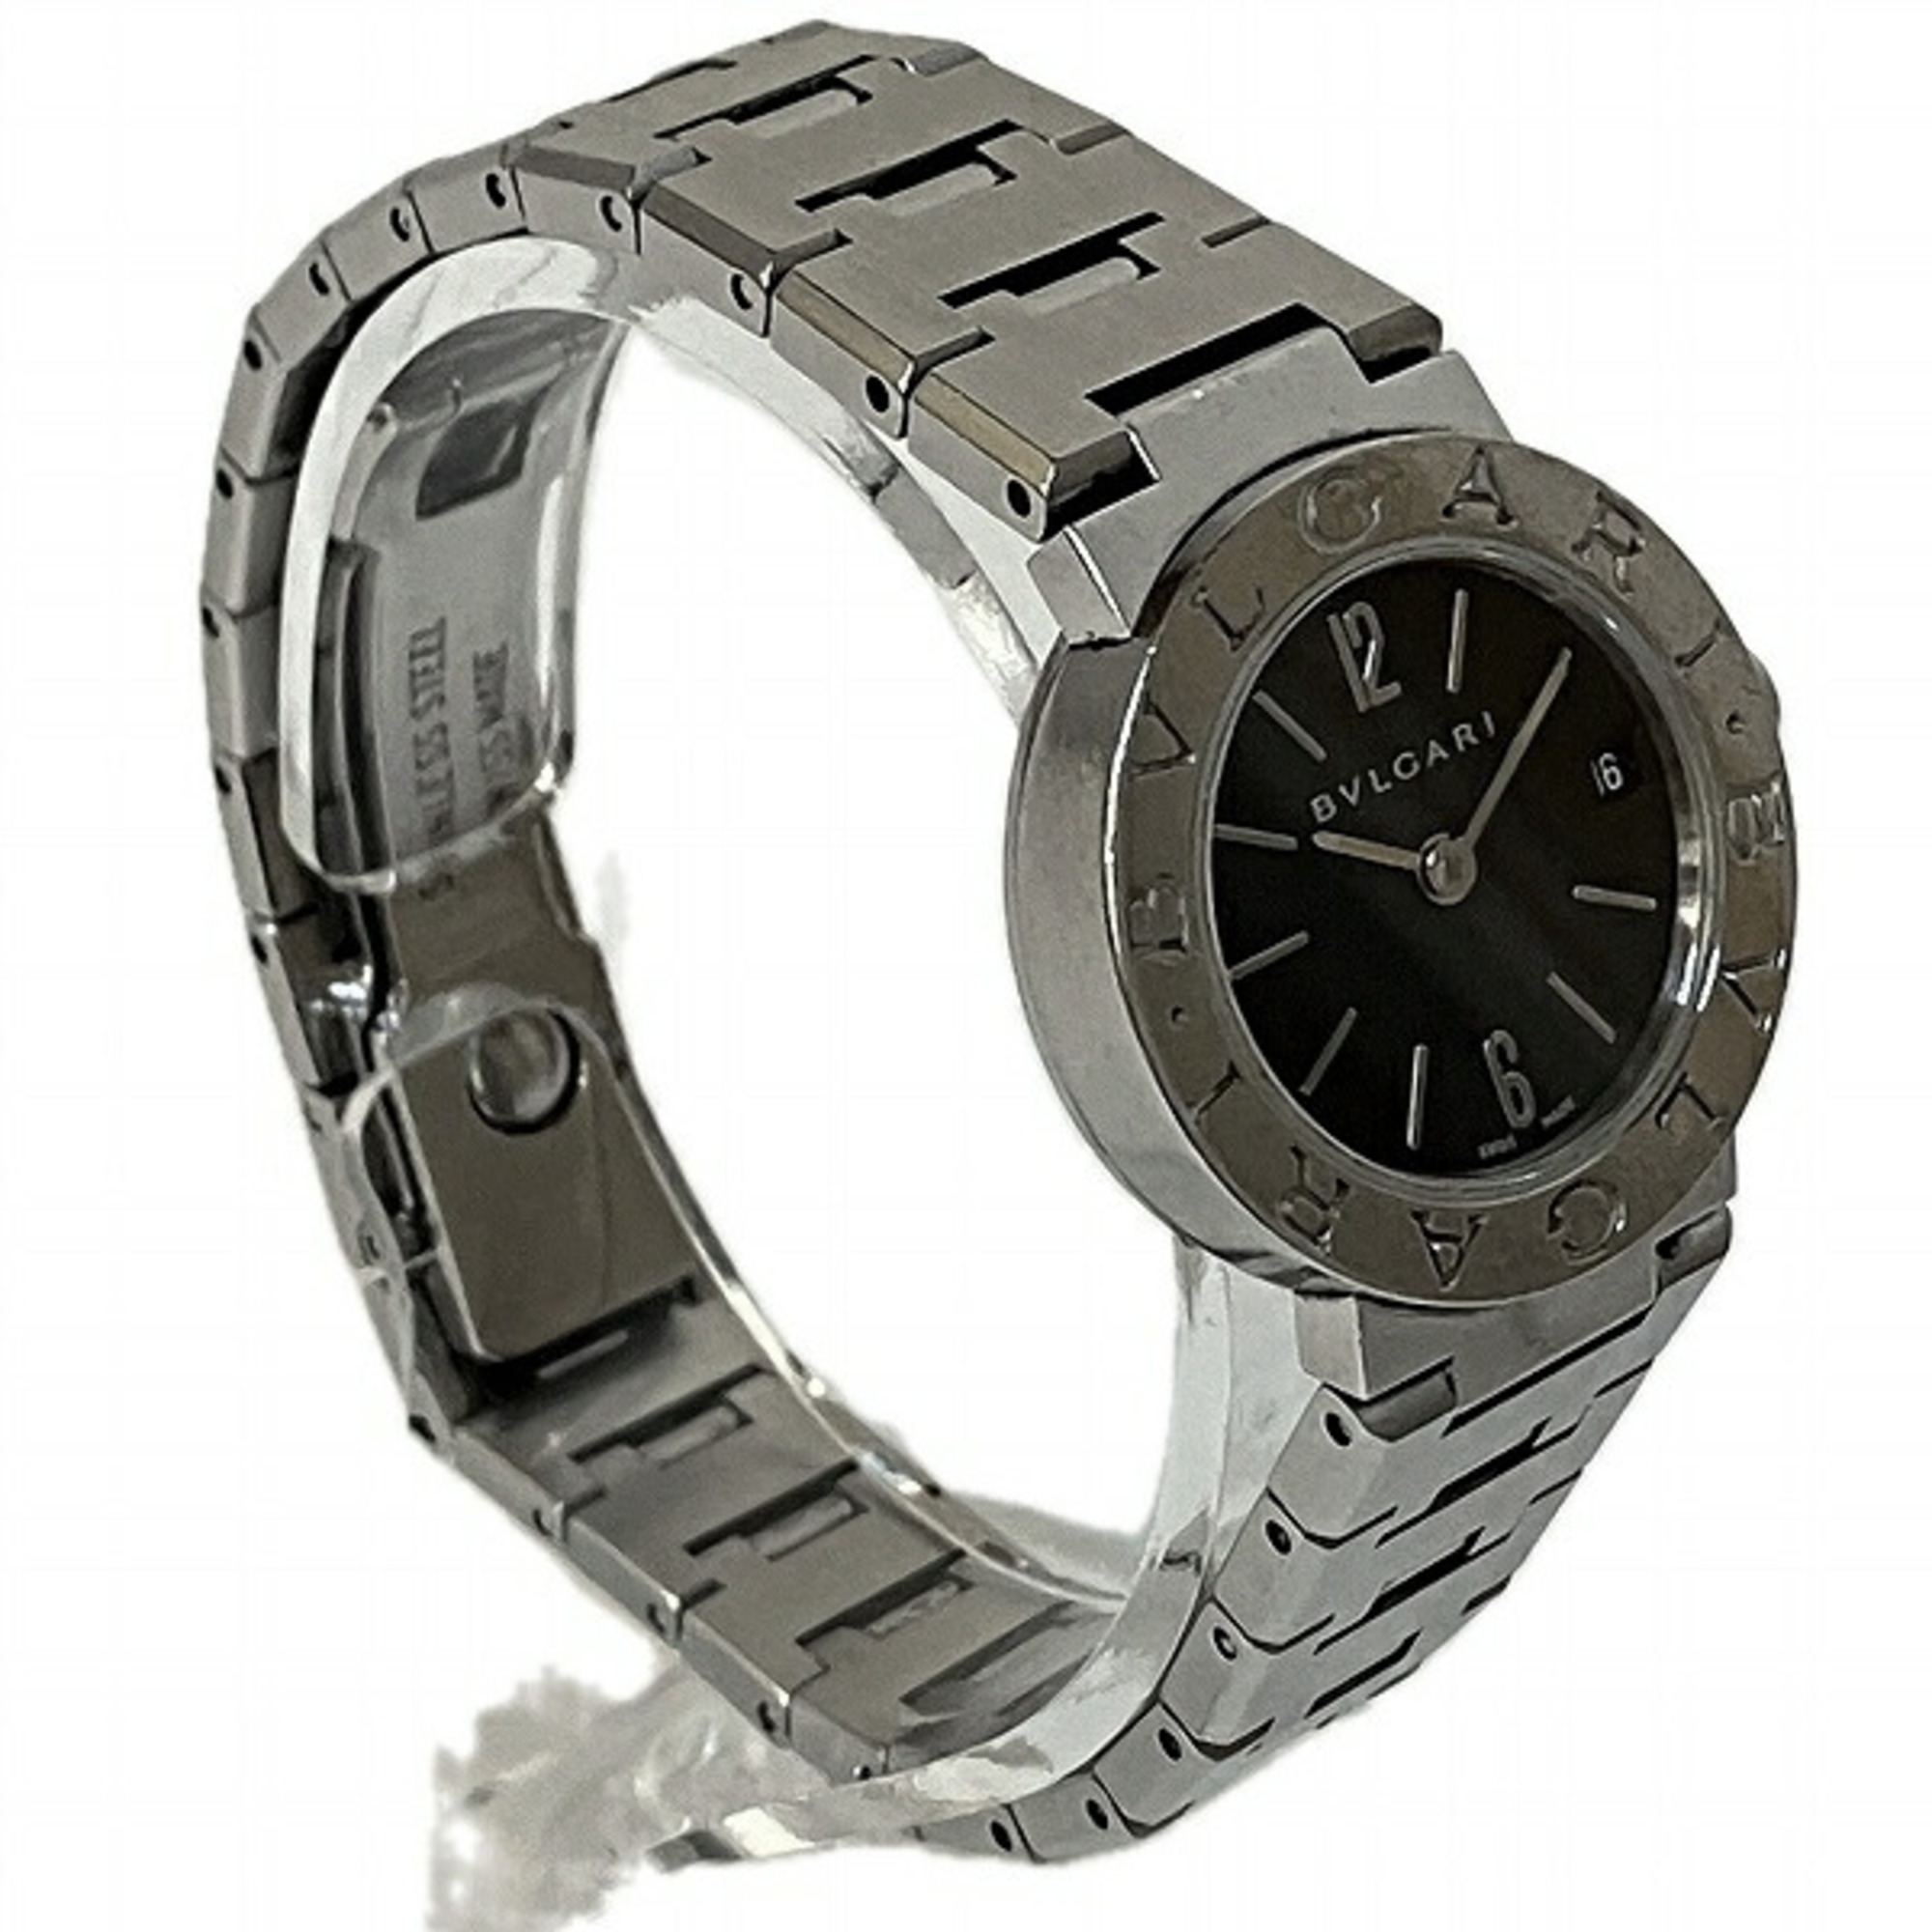 BVLGARI BB23SS quartz watch wristwatch ladies